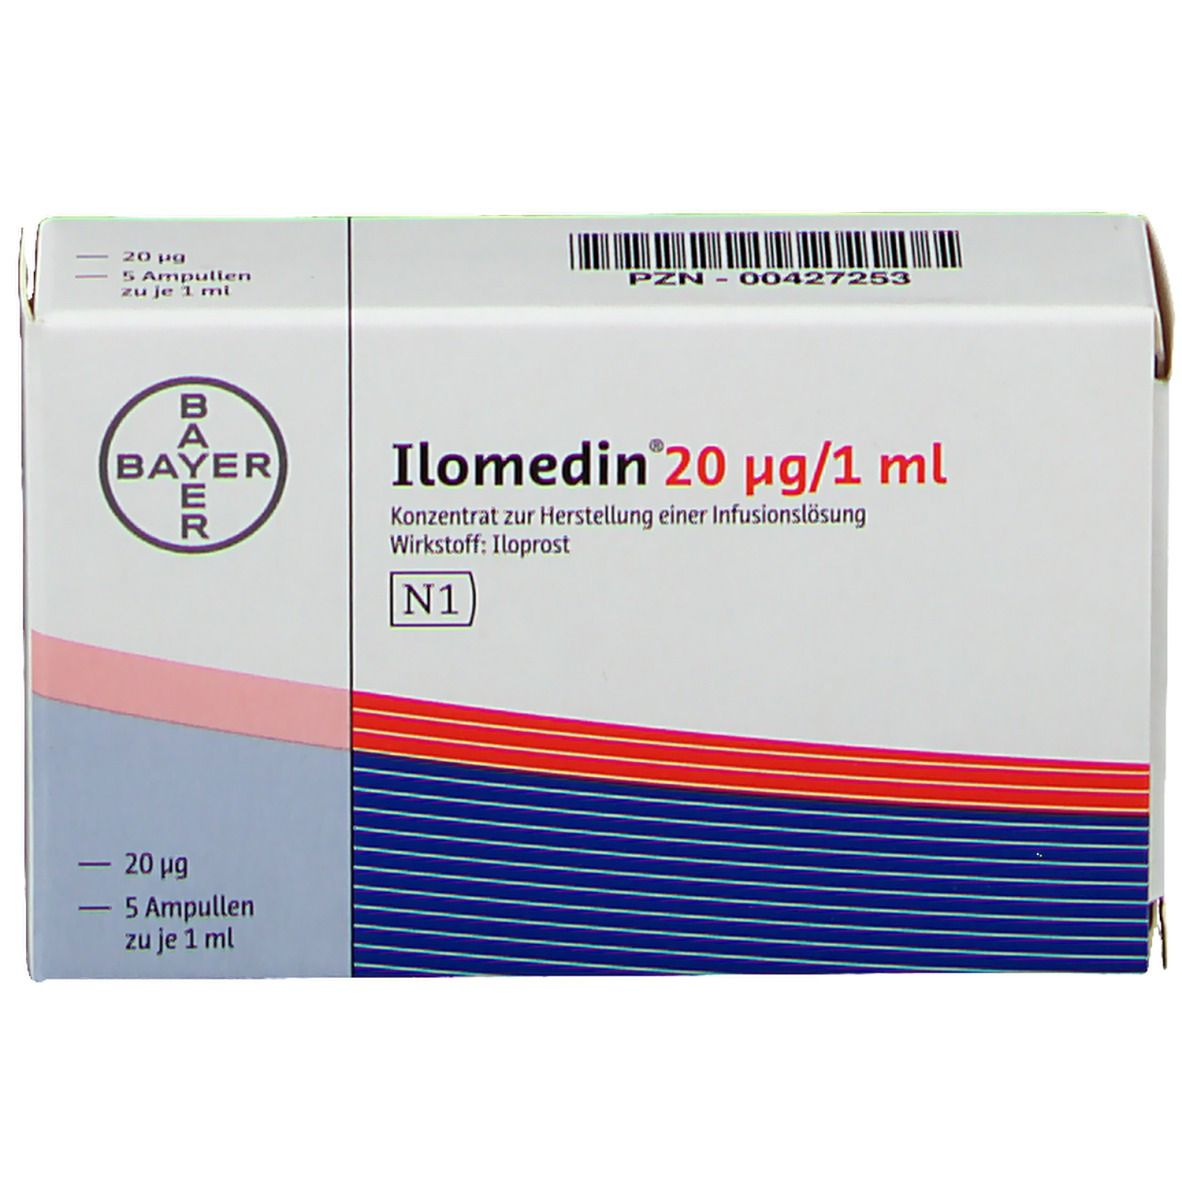 Ilomedin® 20 ug/1 ml